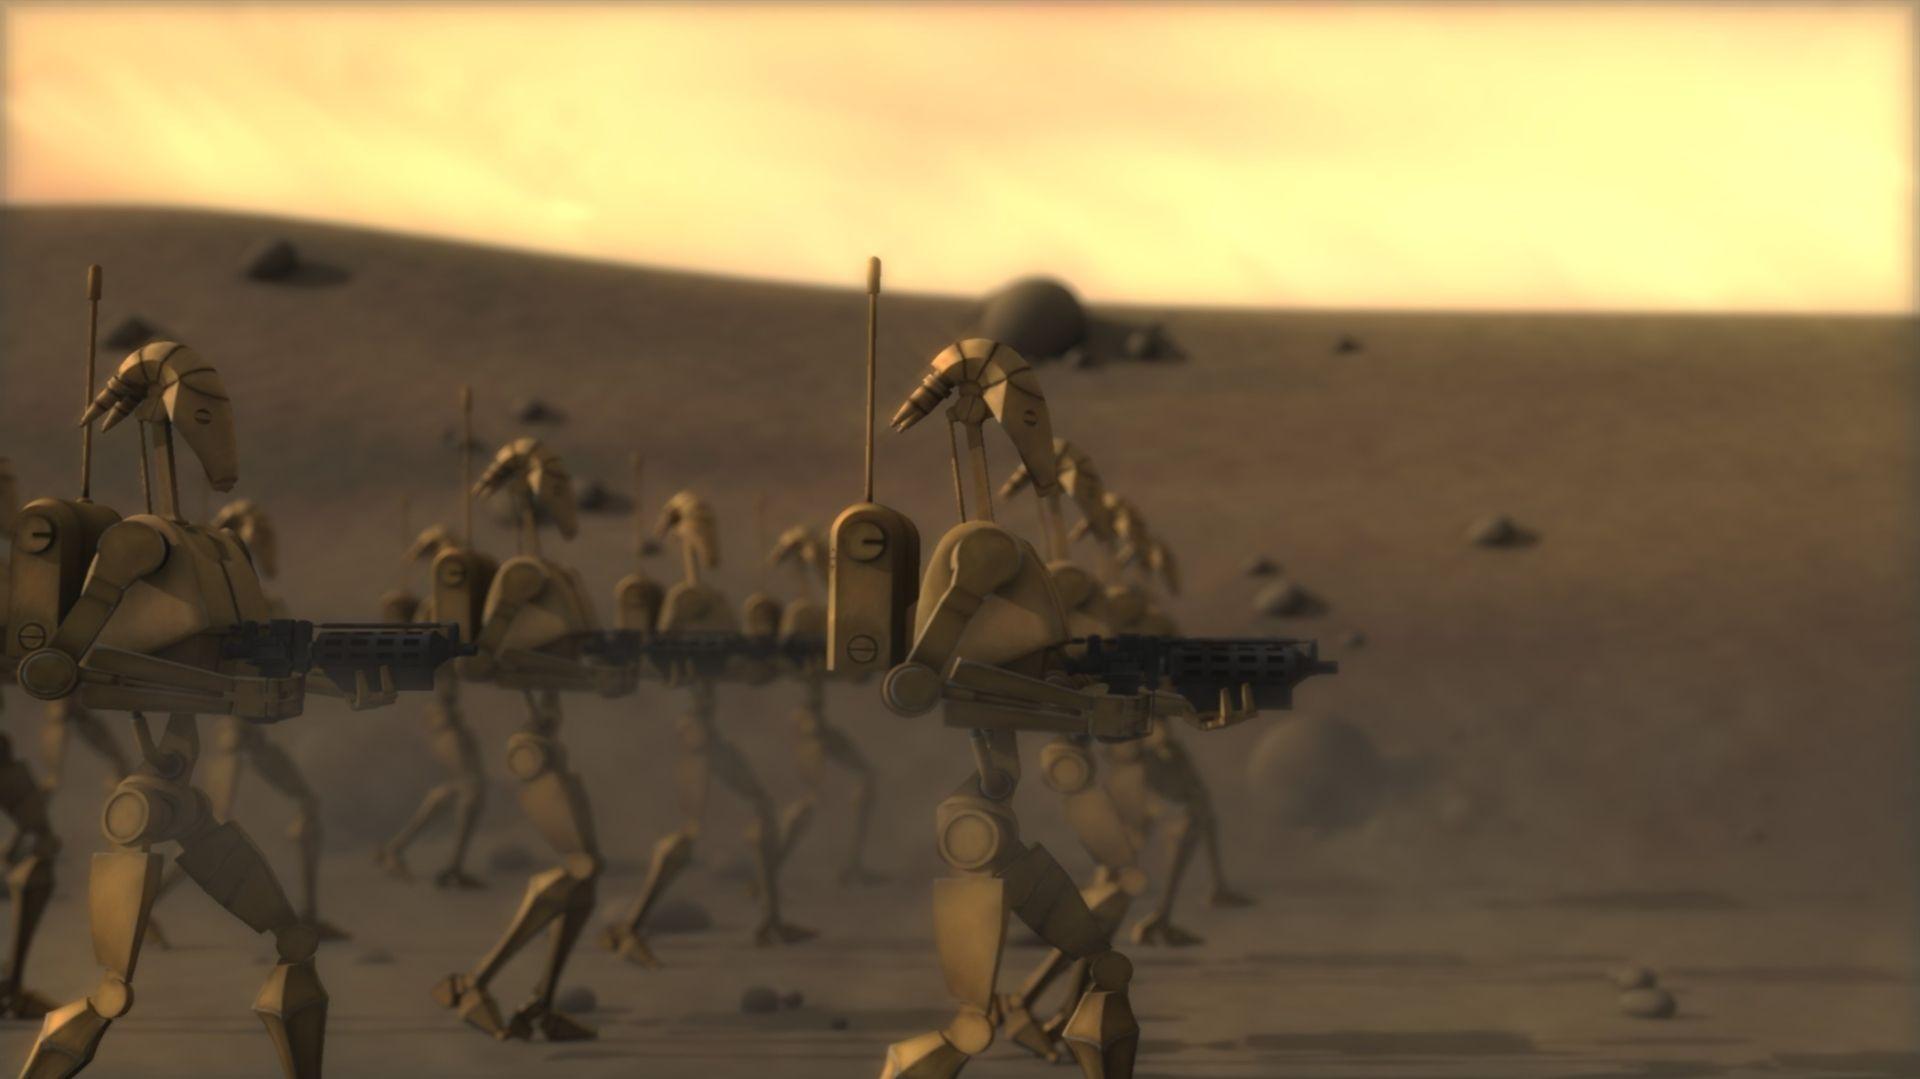 B1 Battle Droids Star Wars Sci Fi Movies Shows Desktop